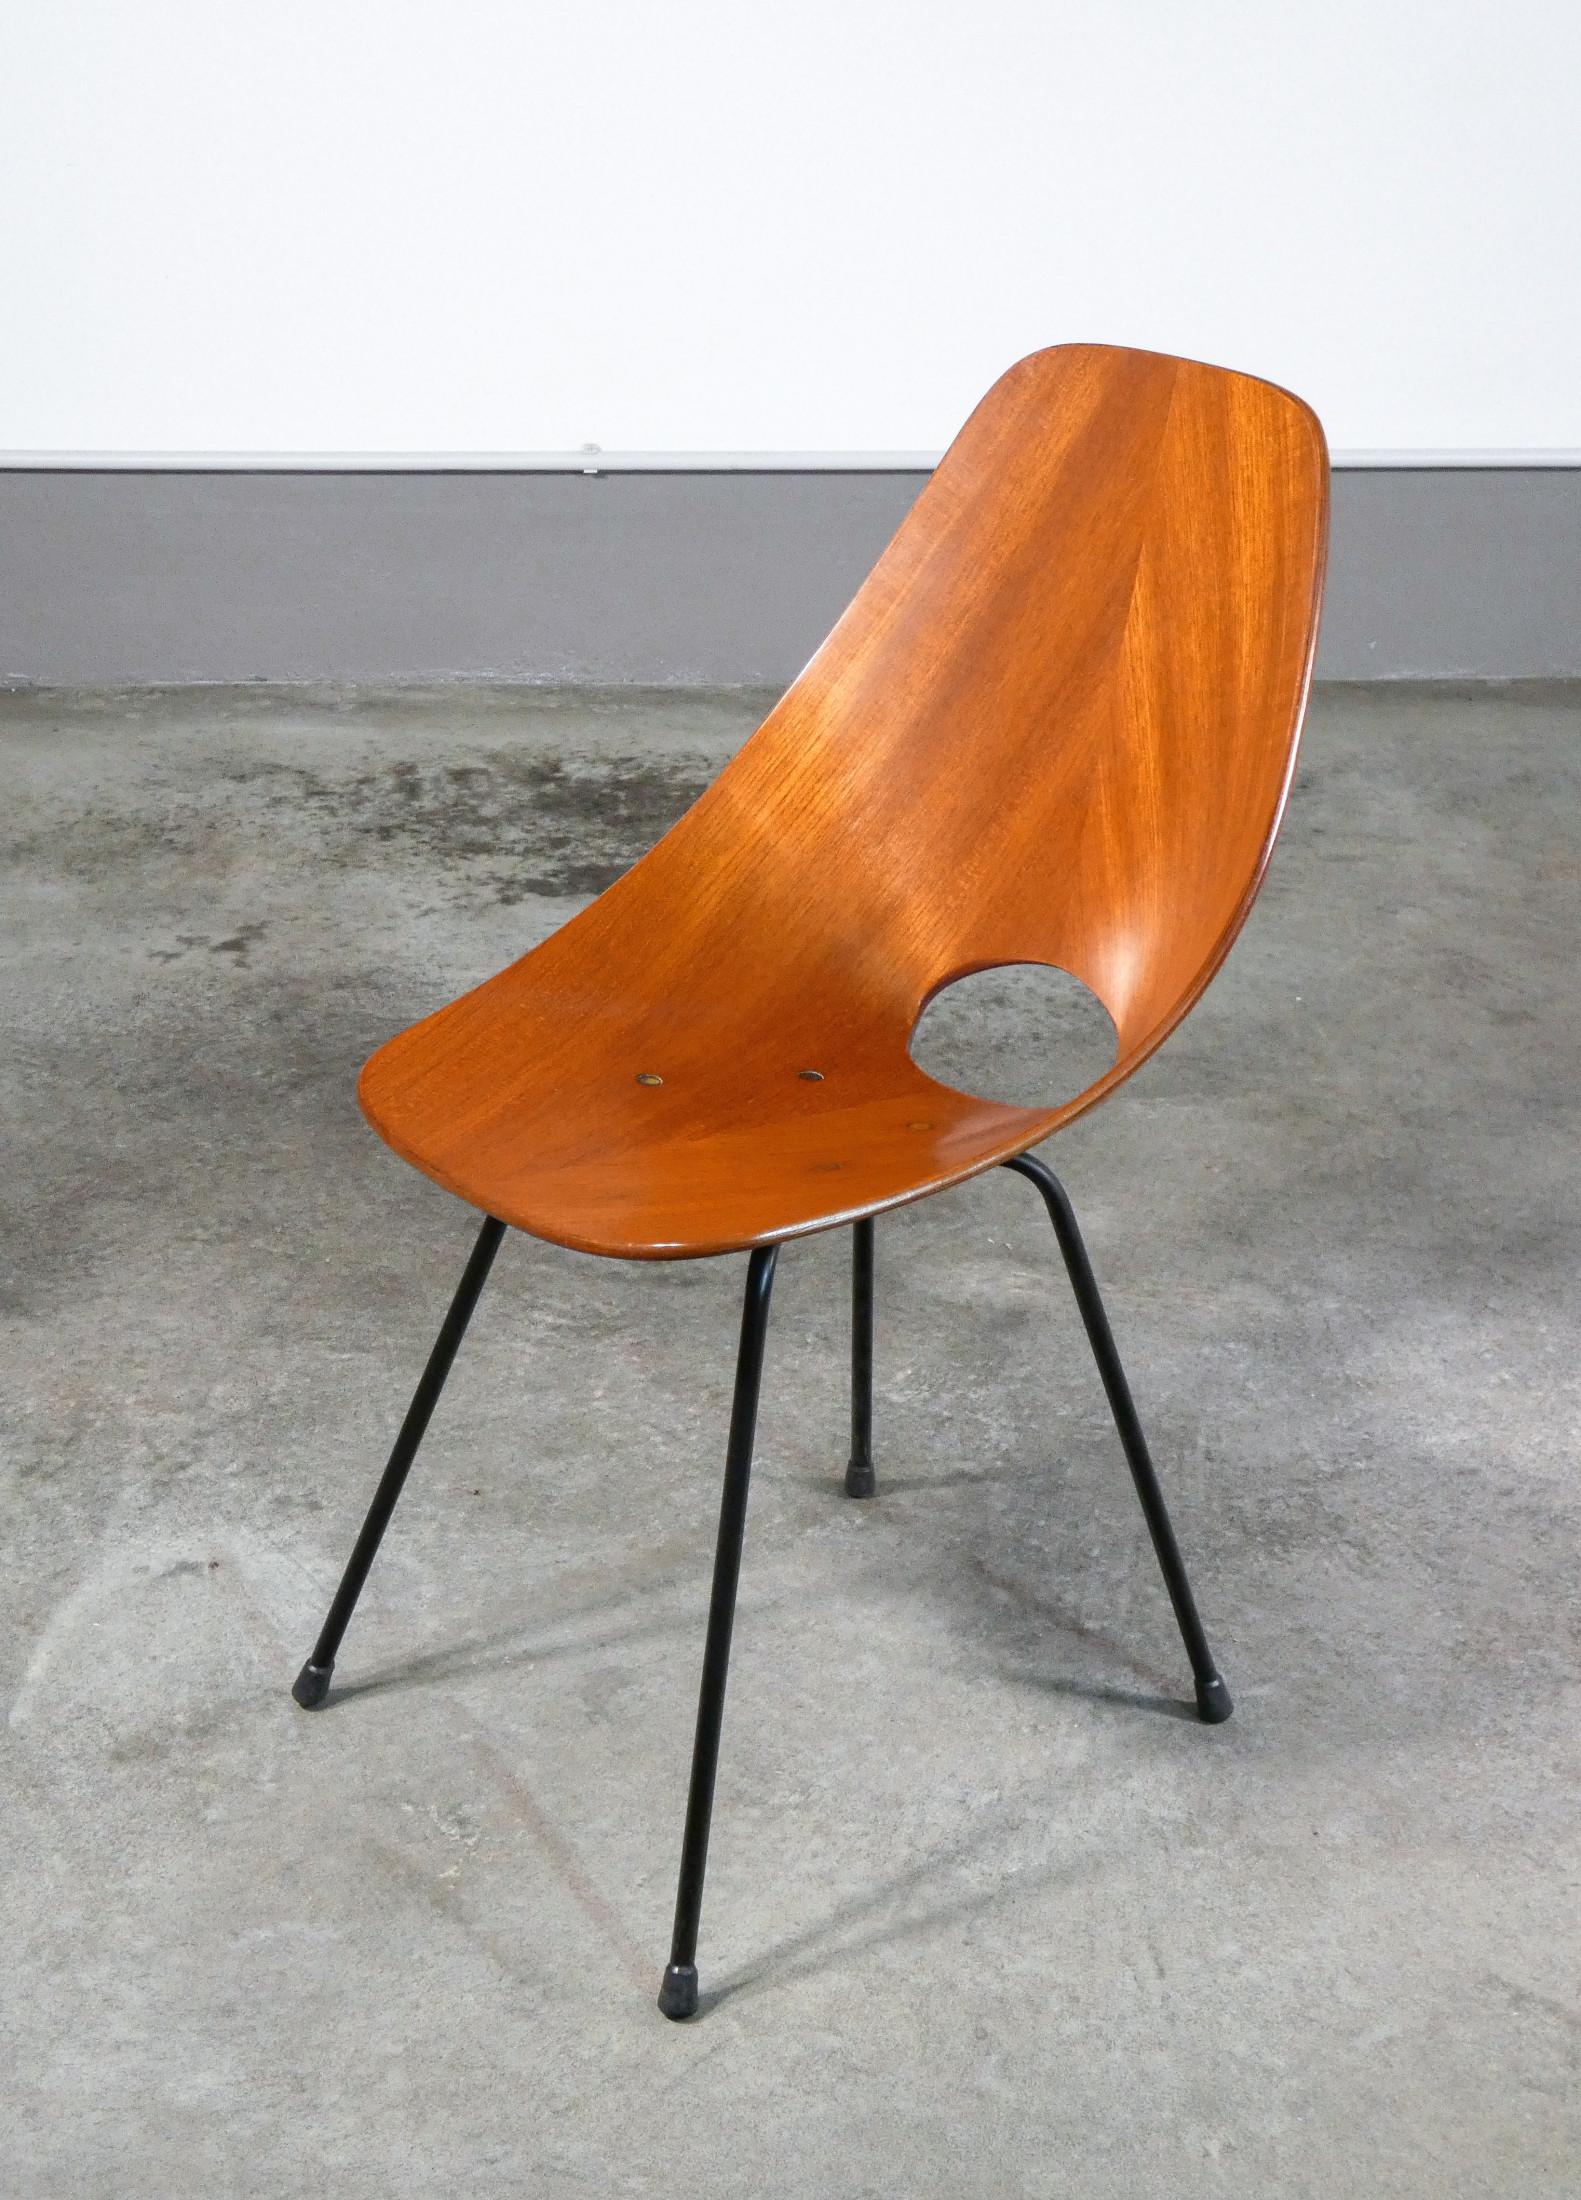 Medea chair, design Vittorio Nobili for Fratelli Tagliabue

Origin
Italy

Period
1950s

Designer
Vittorio Nobili

Brand
TAGLIABUE brothers

Template
Medea

Materials
Wood and metal

Dimensions
Height: 82 cm
Width: 46 cm
Depth: